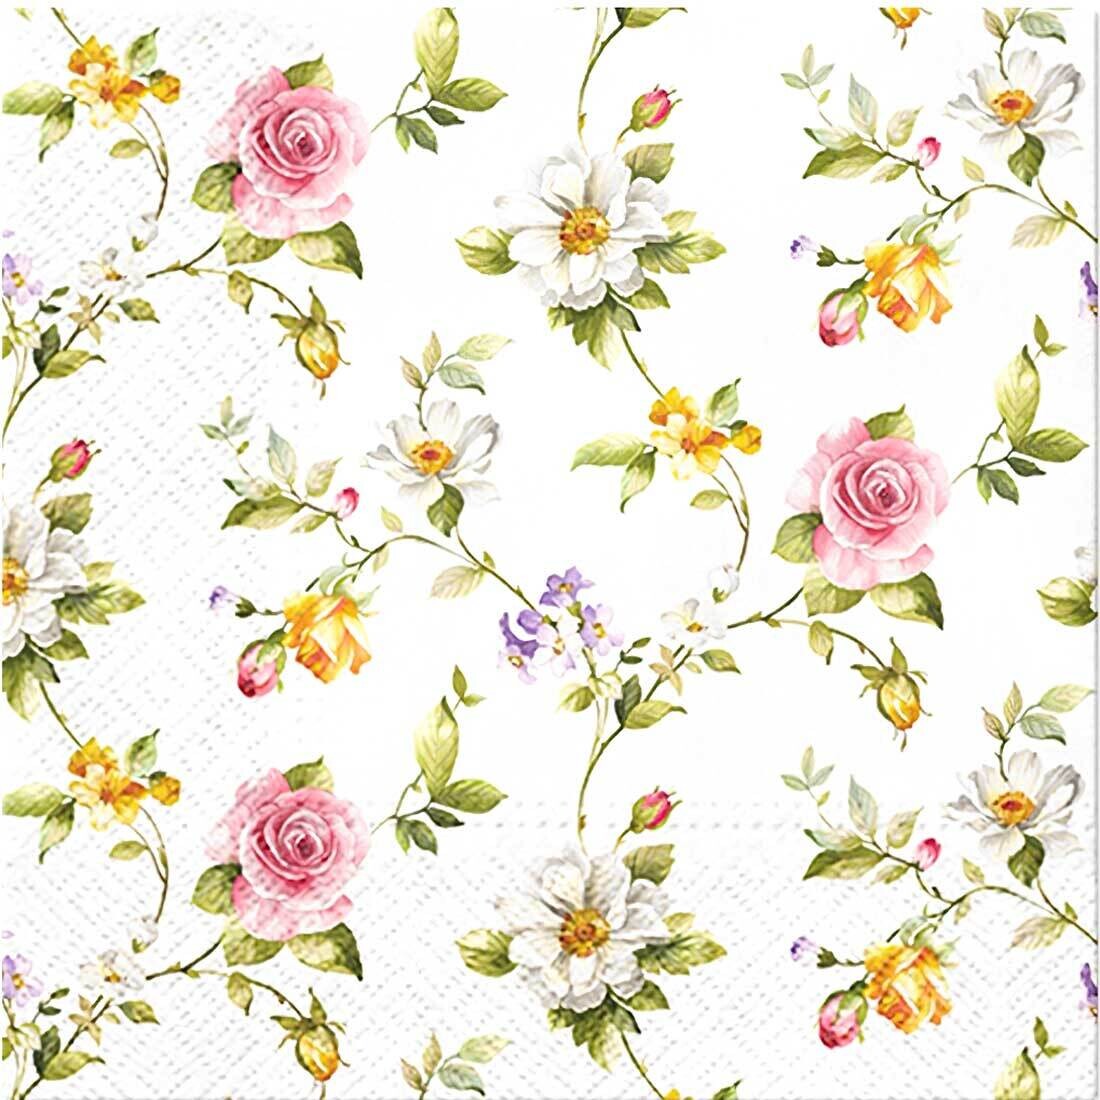 Decoupage Paper Napkins - Floral - Tender Roses (1 Sheet)